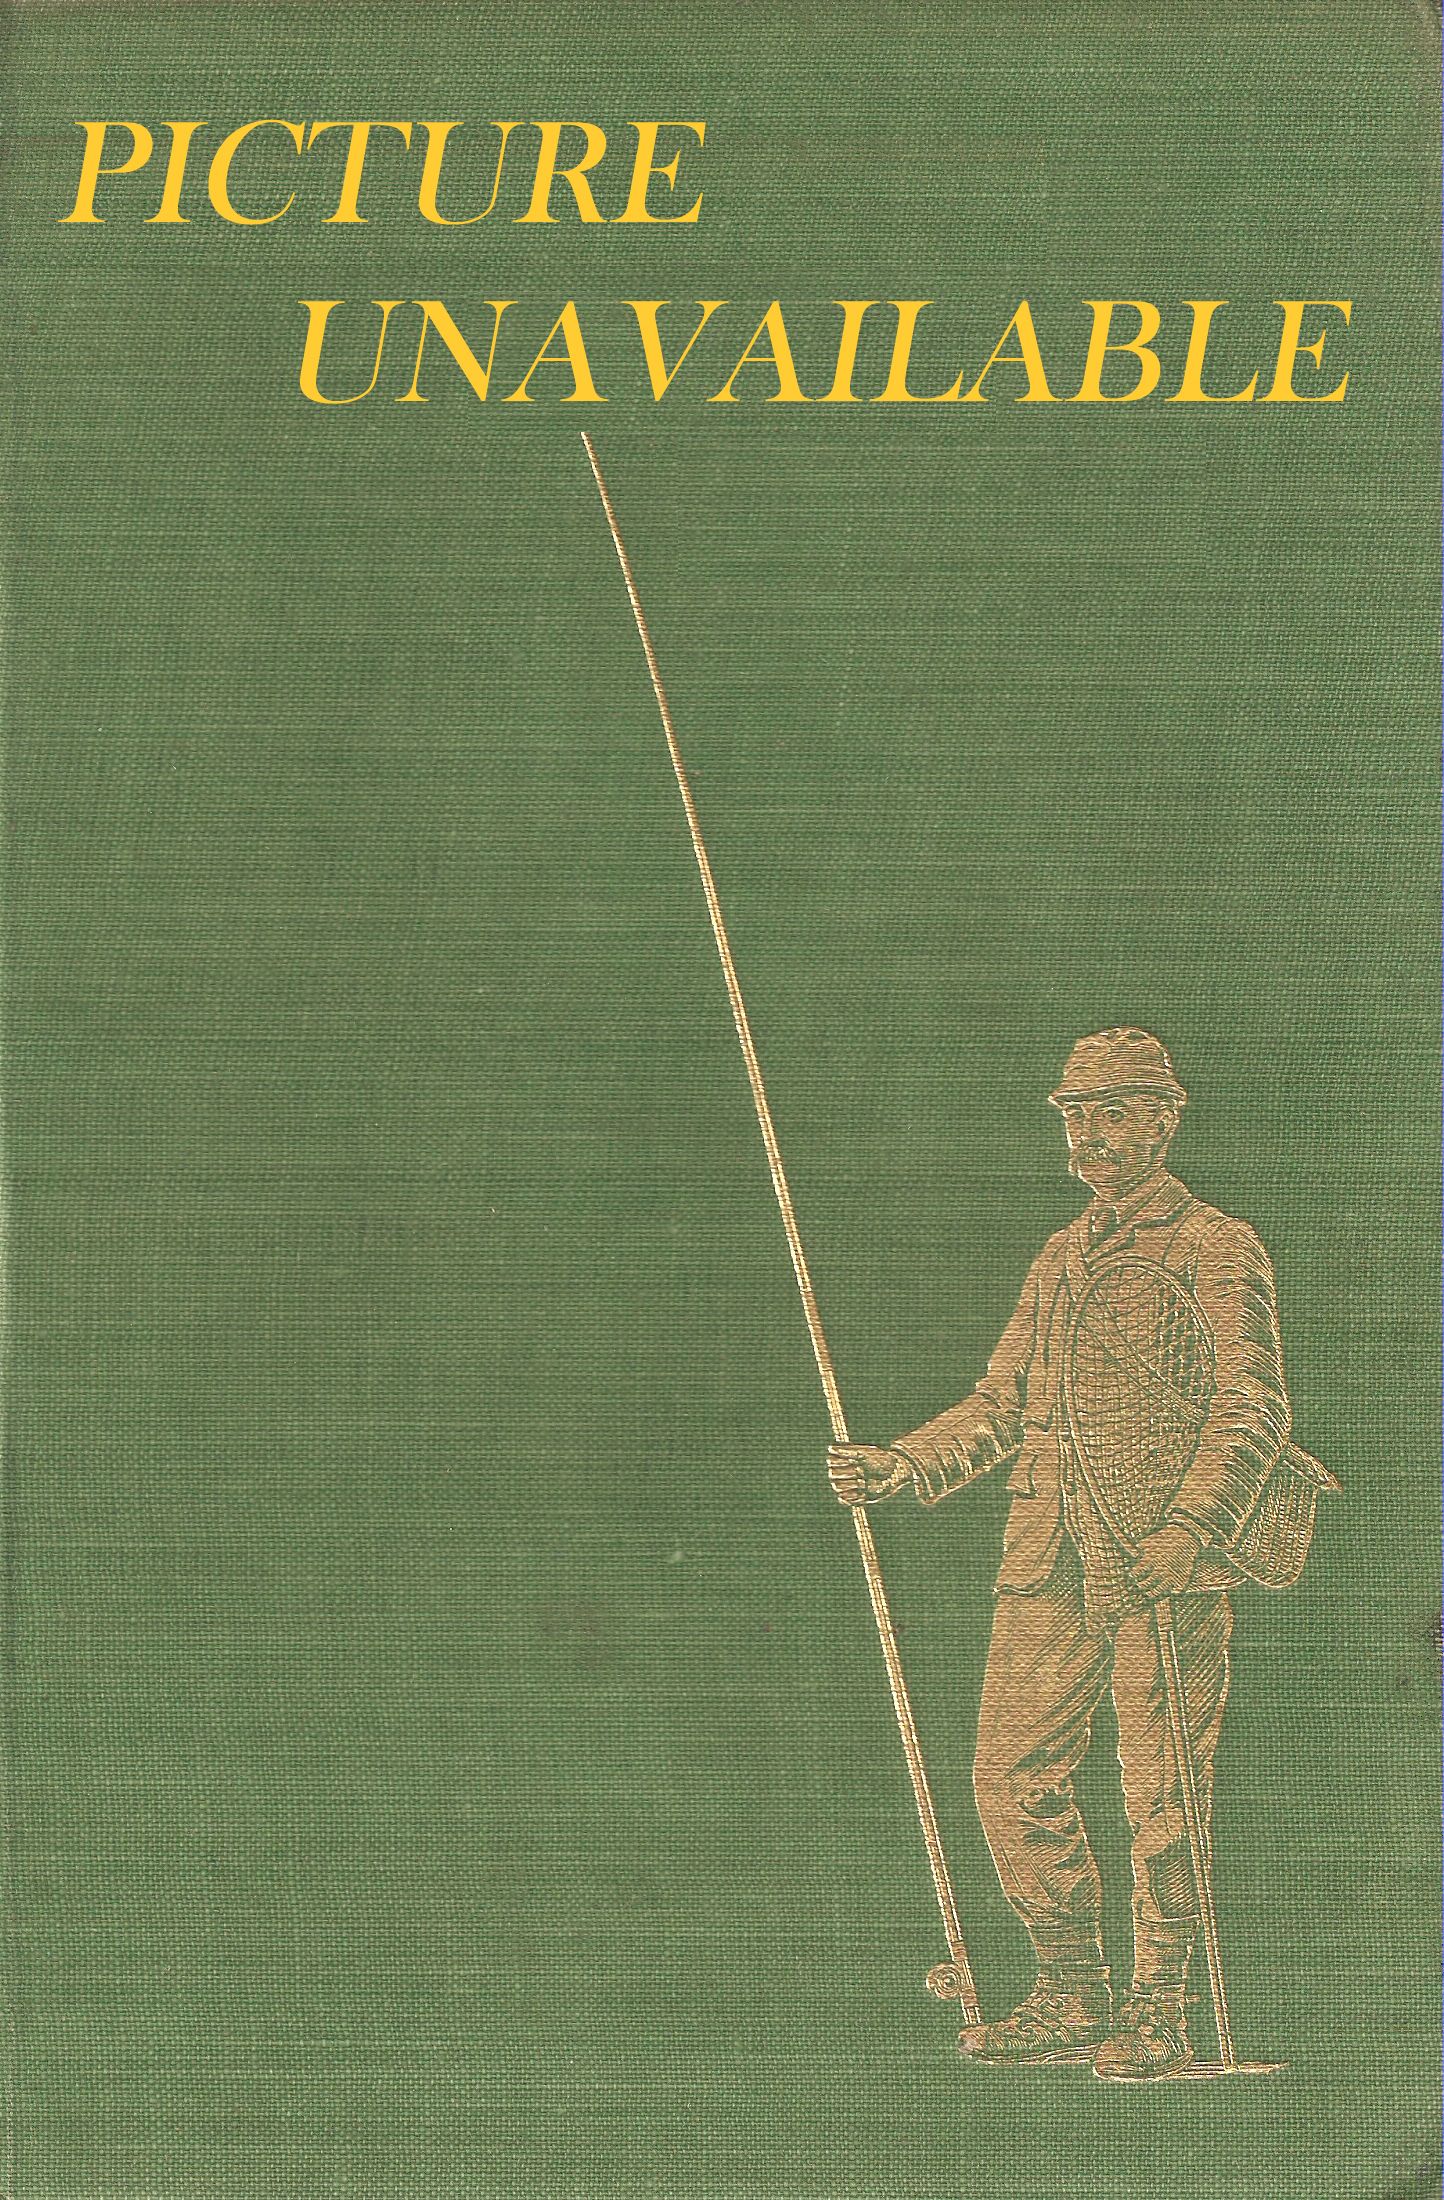 CREEL: A FISHING MAGAZINE. Volume 4, number 10. April 1967.